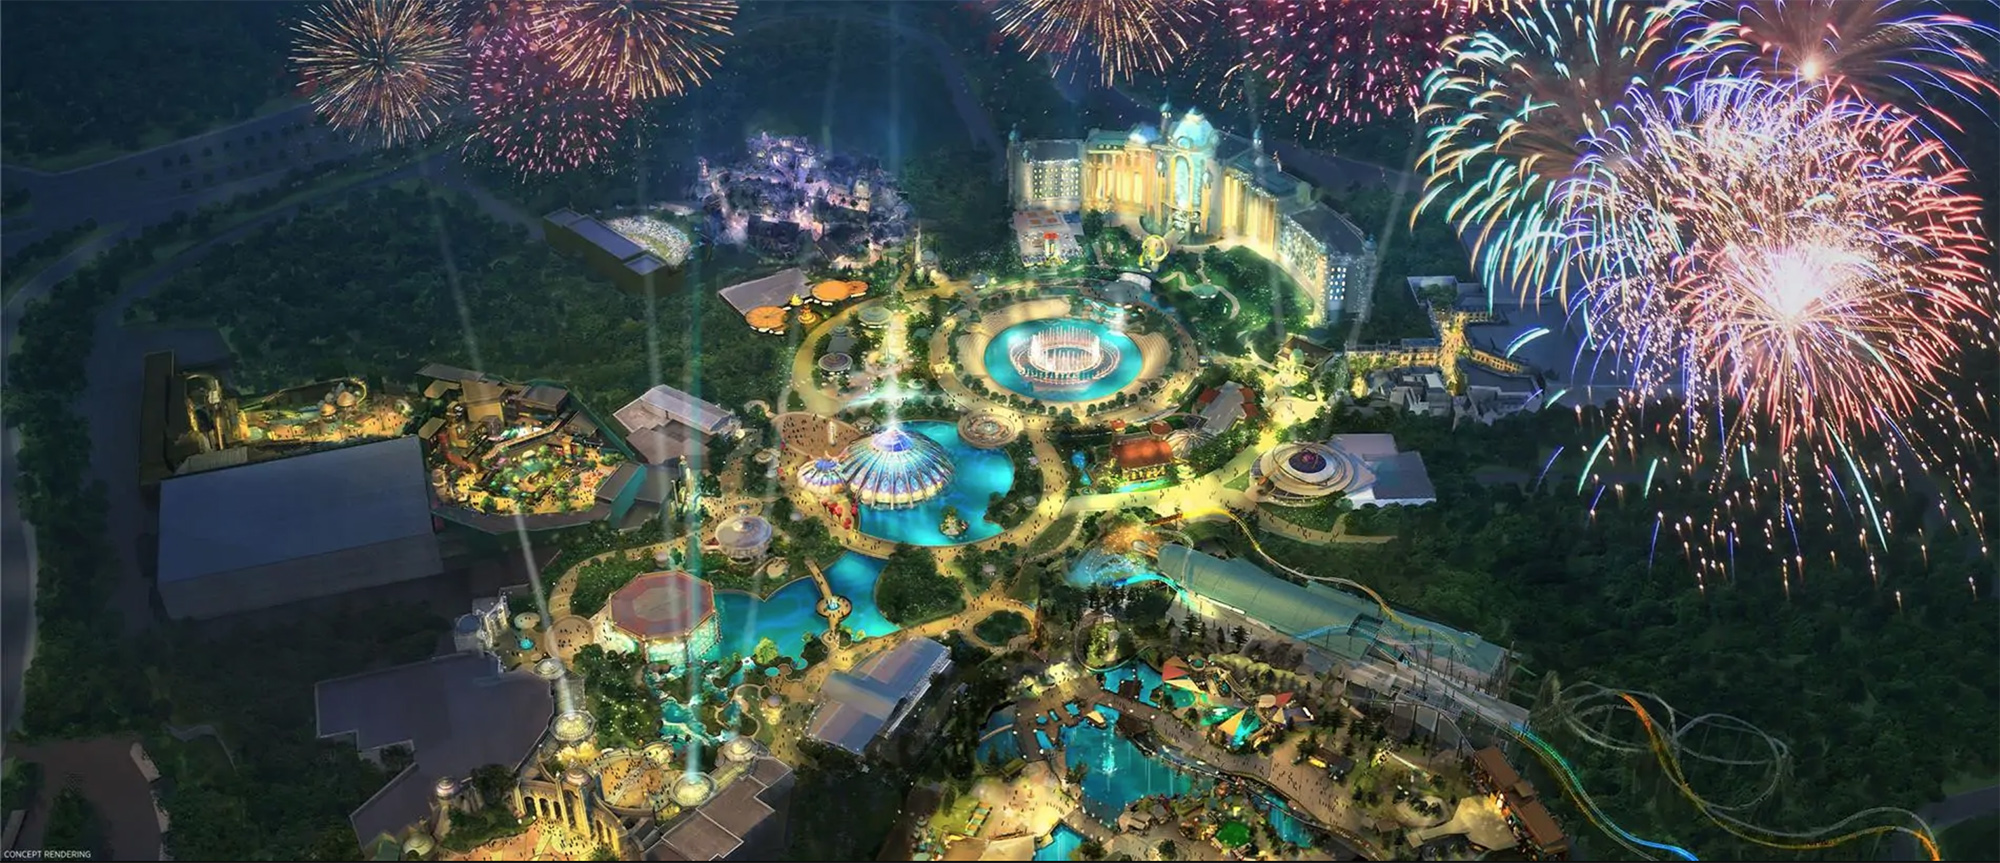 Universal Restarts Epic Universe Construction Disney Tourist Blog - disney water park roblox